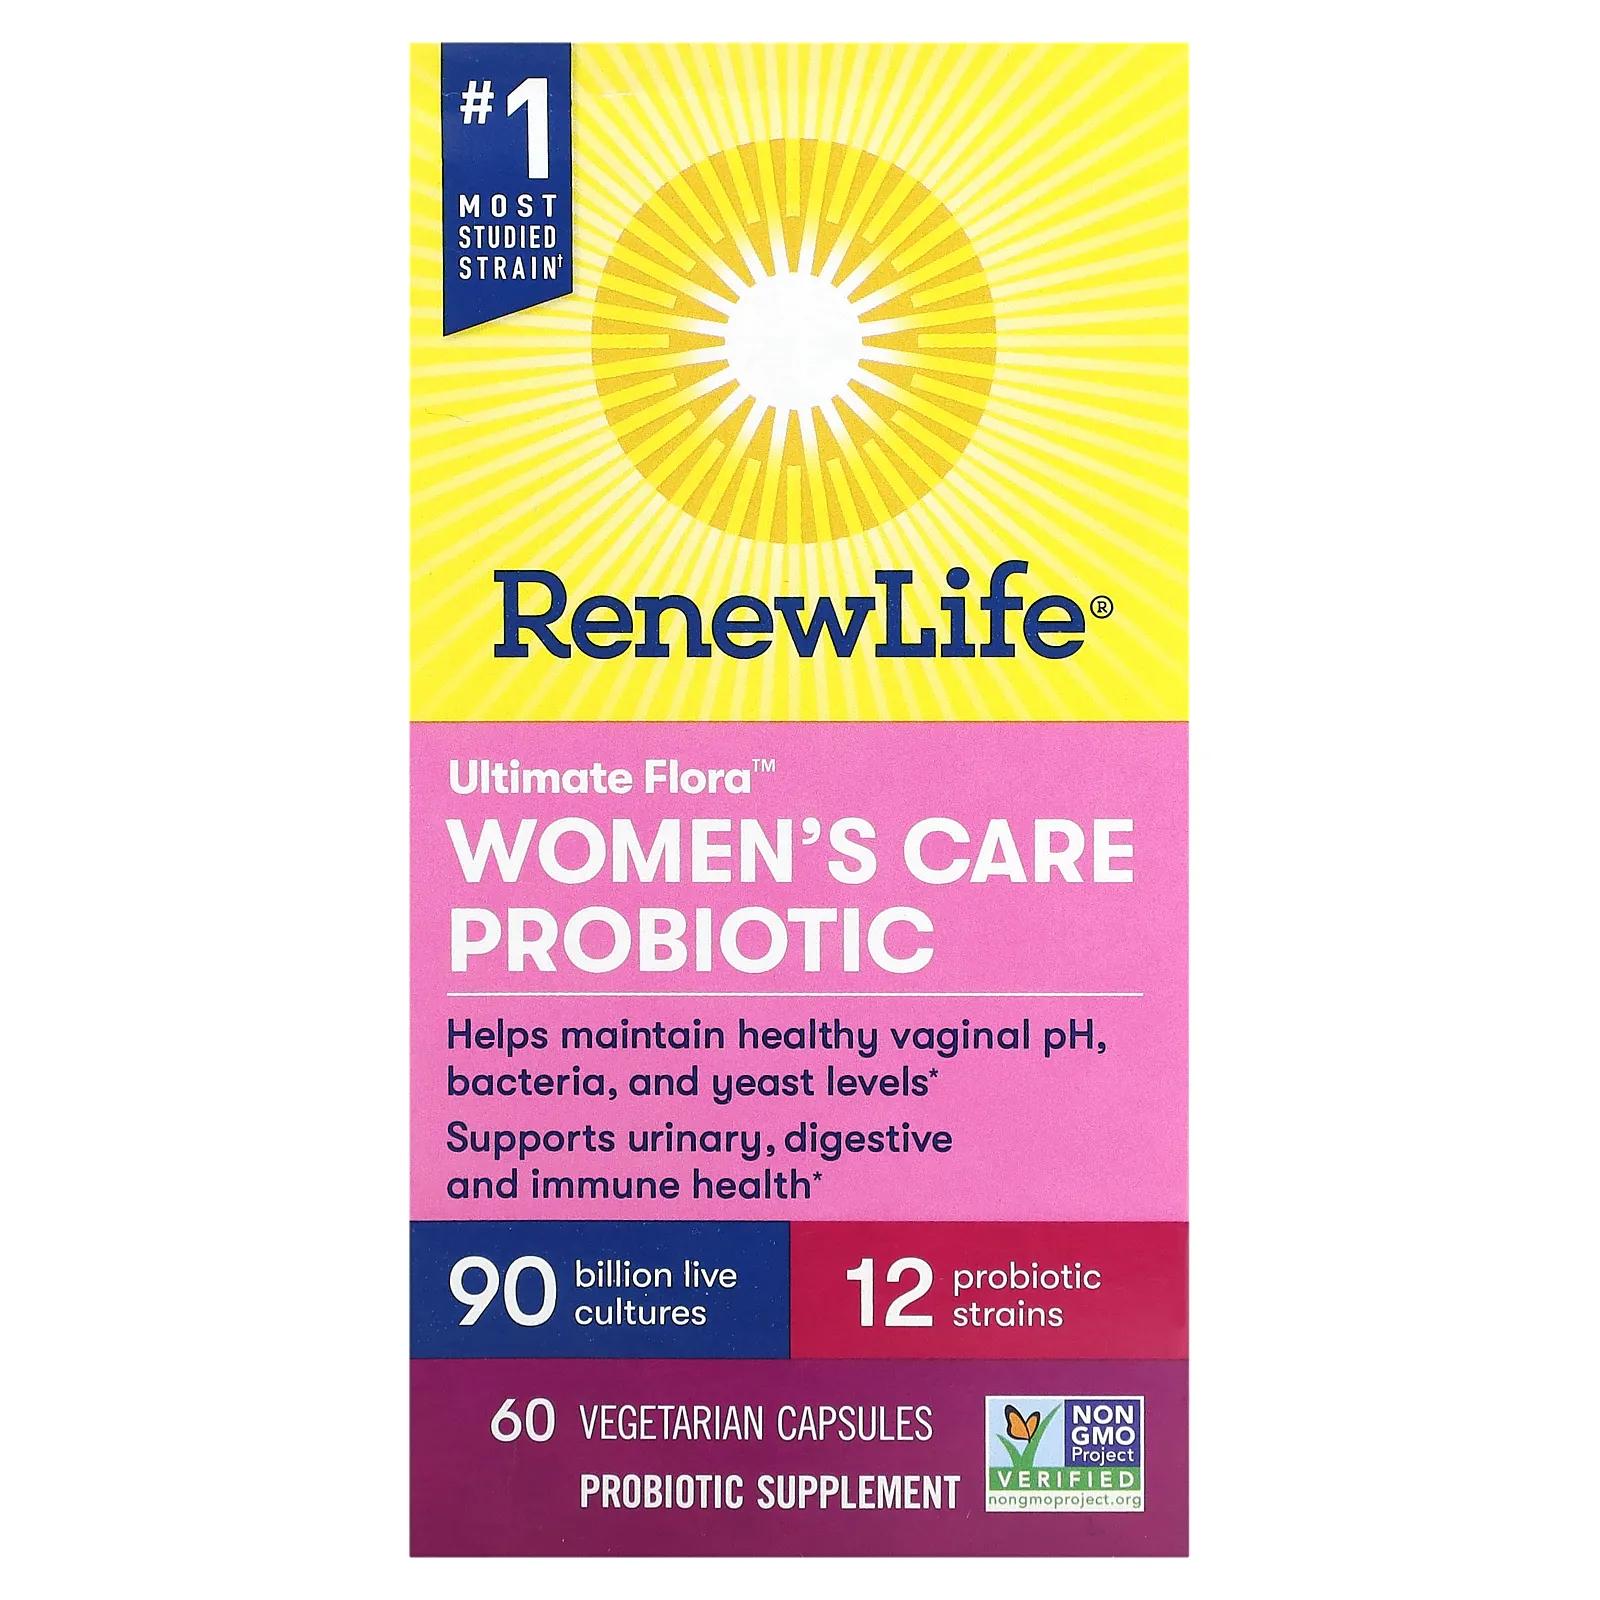 Renew Life Пробиотик Ultimate Flora Women's Care 90 миллиардов 60 вег капсул nature s way fortify optima женский пробиотик расширенный уход 90 миллиардов 30 вег капсул